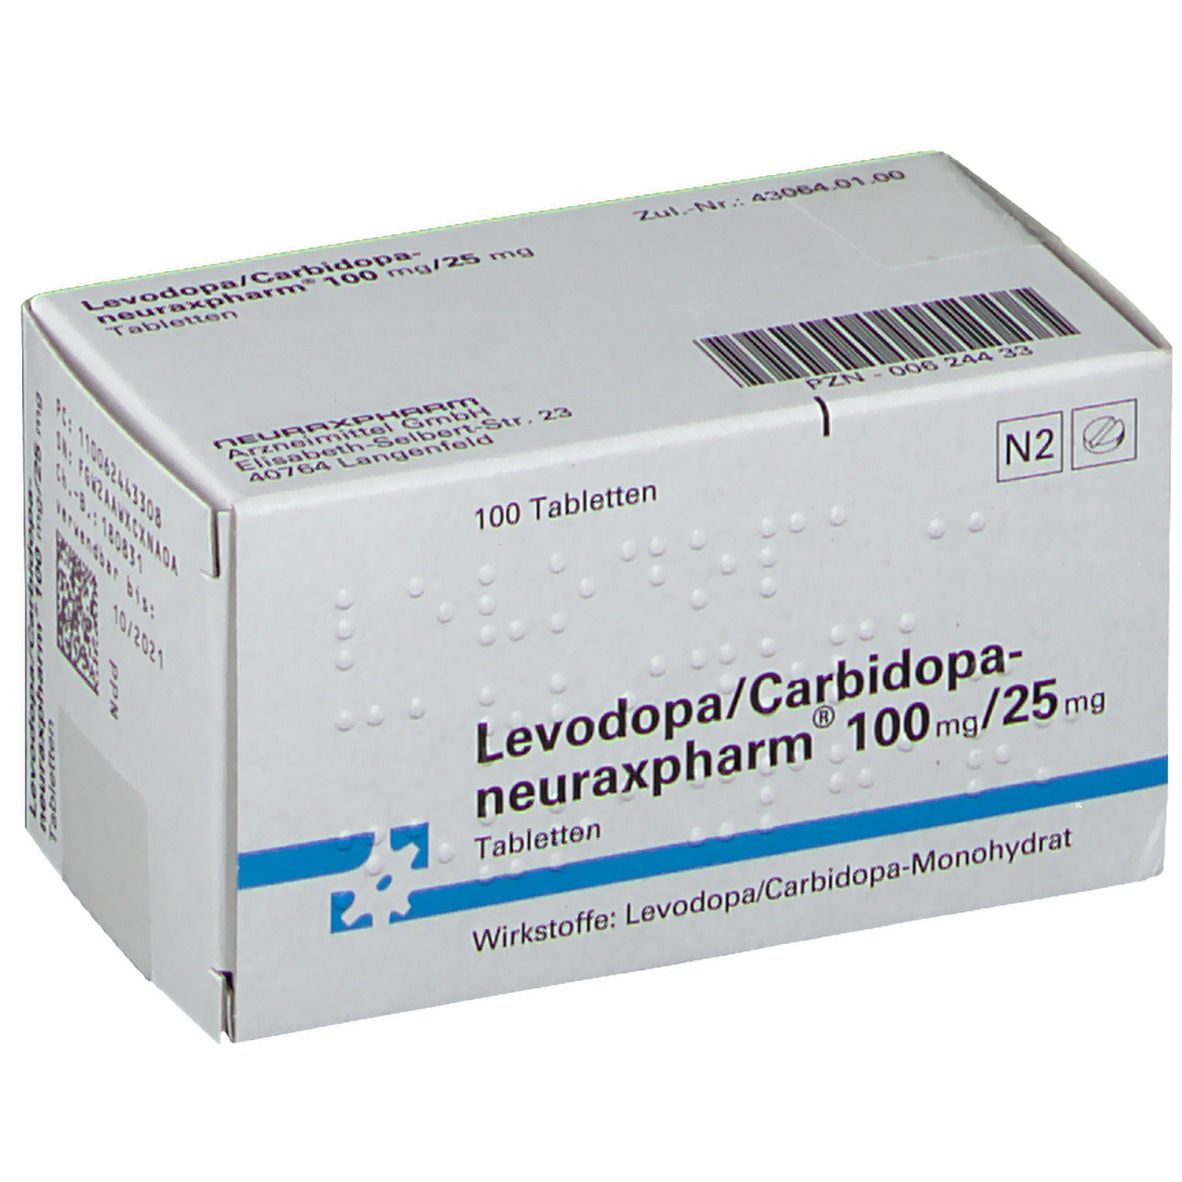 Levodopa/Carbidopa-neuraxpharm® 100 mg/25 mg